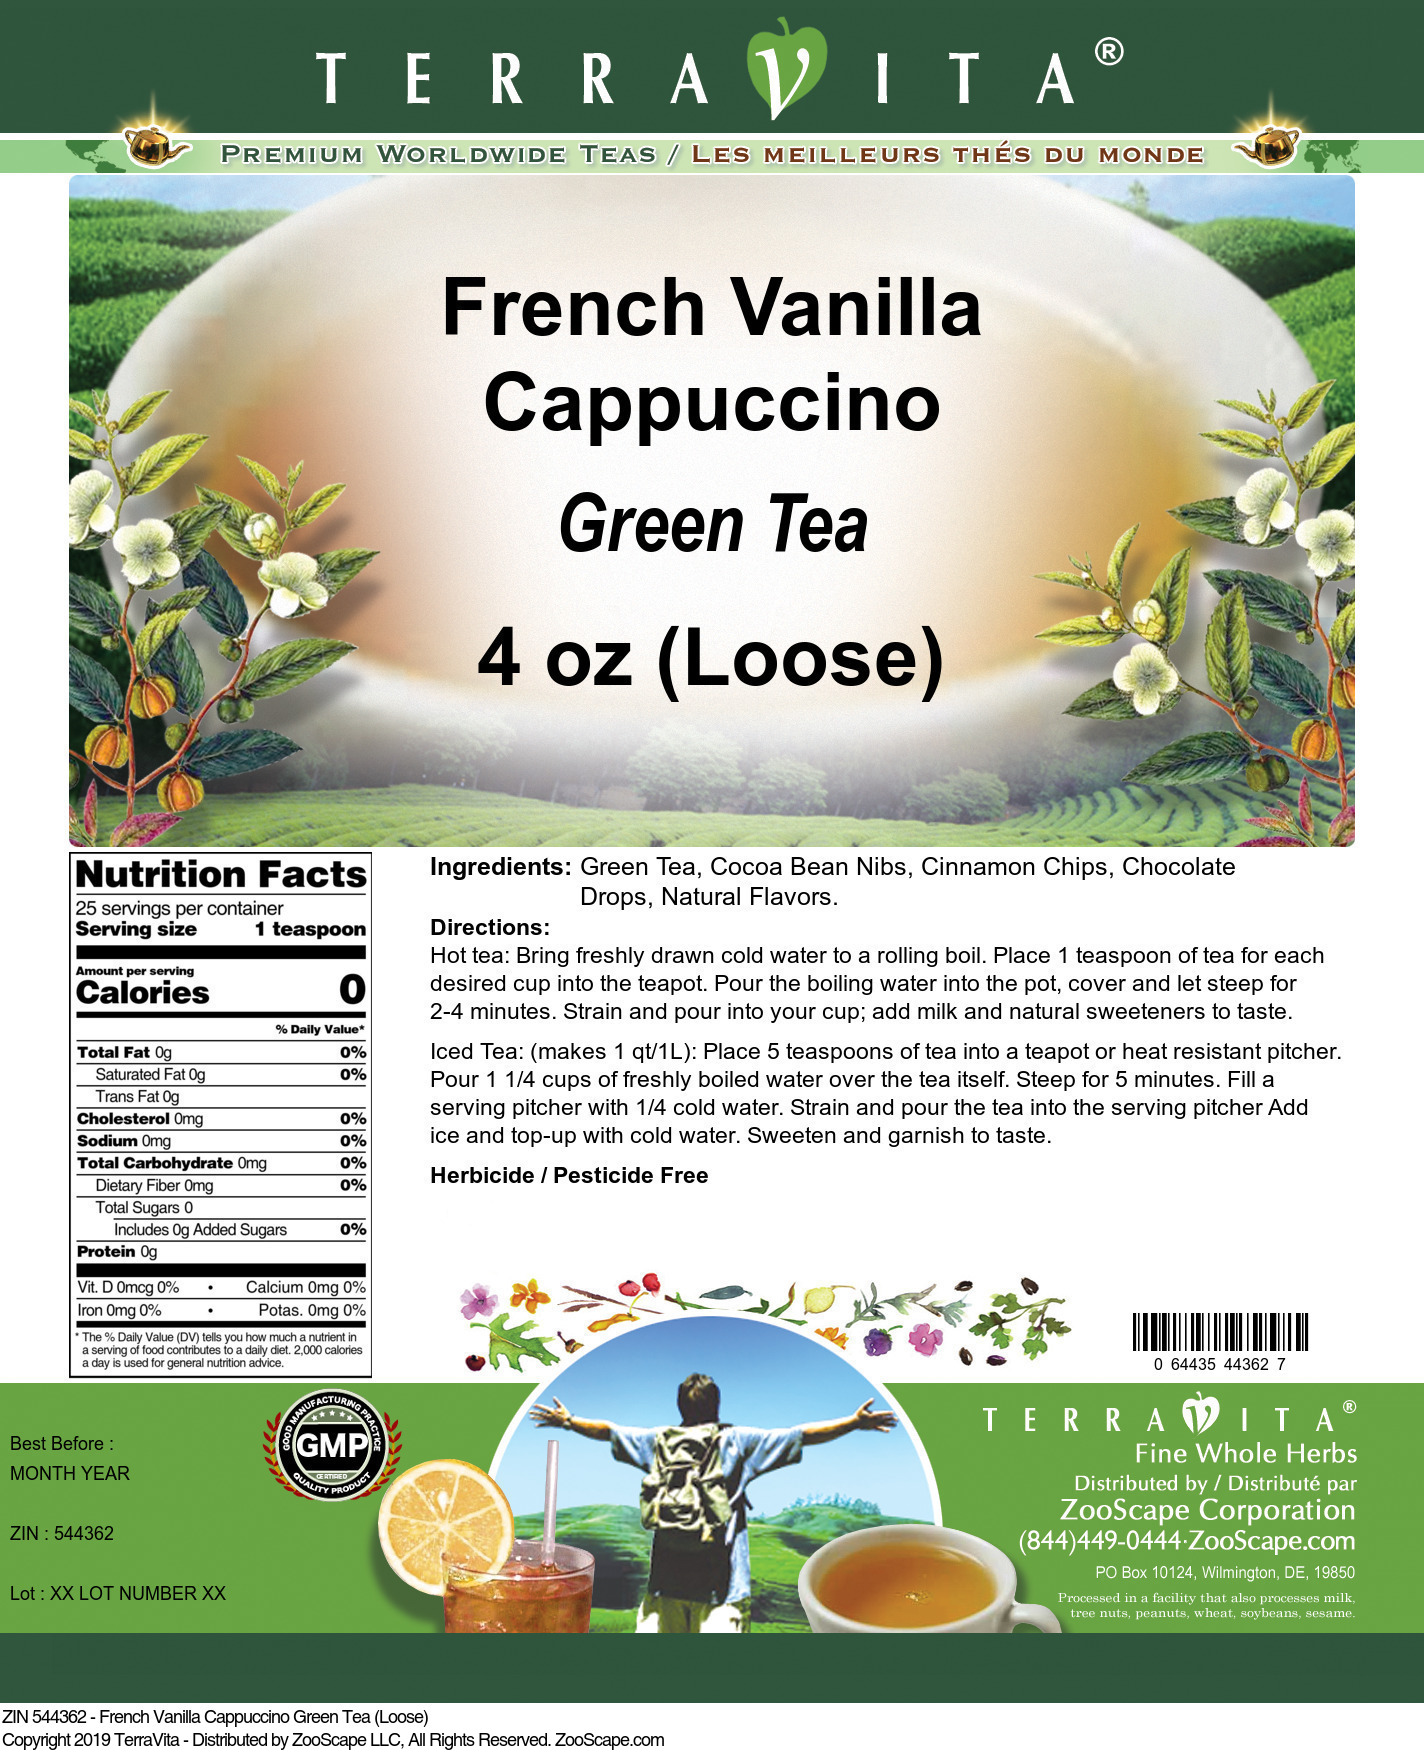 French Vanilla Cappuccino Green Tea (Loose) - Label